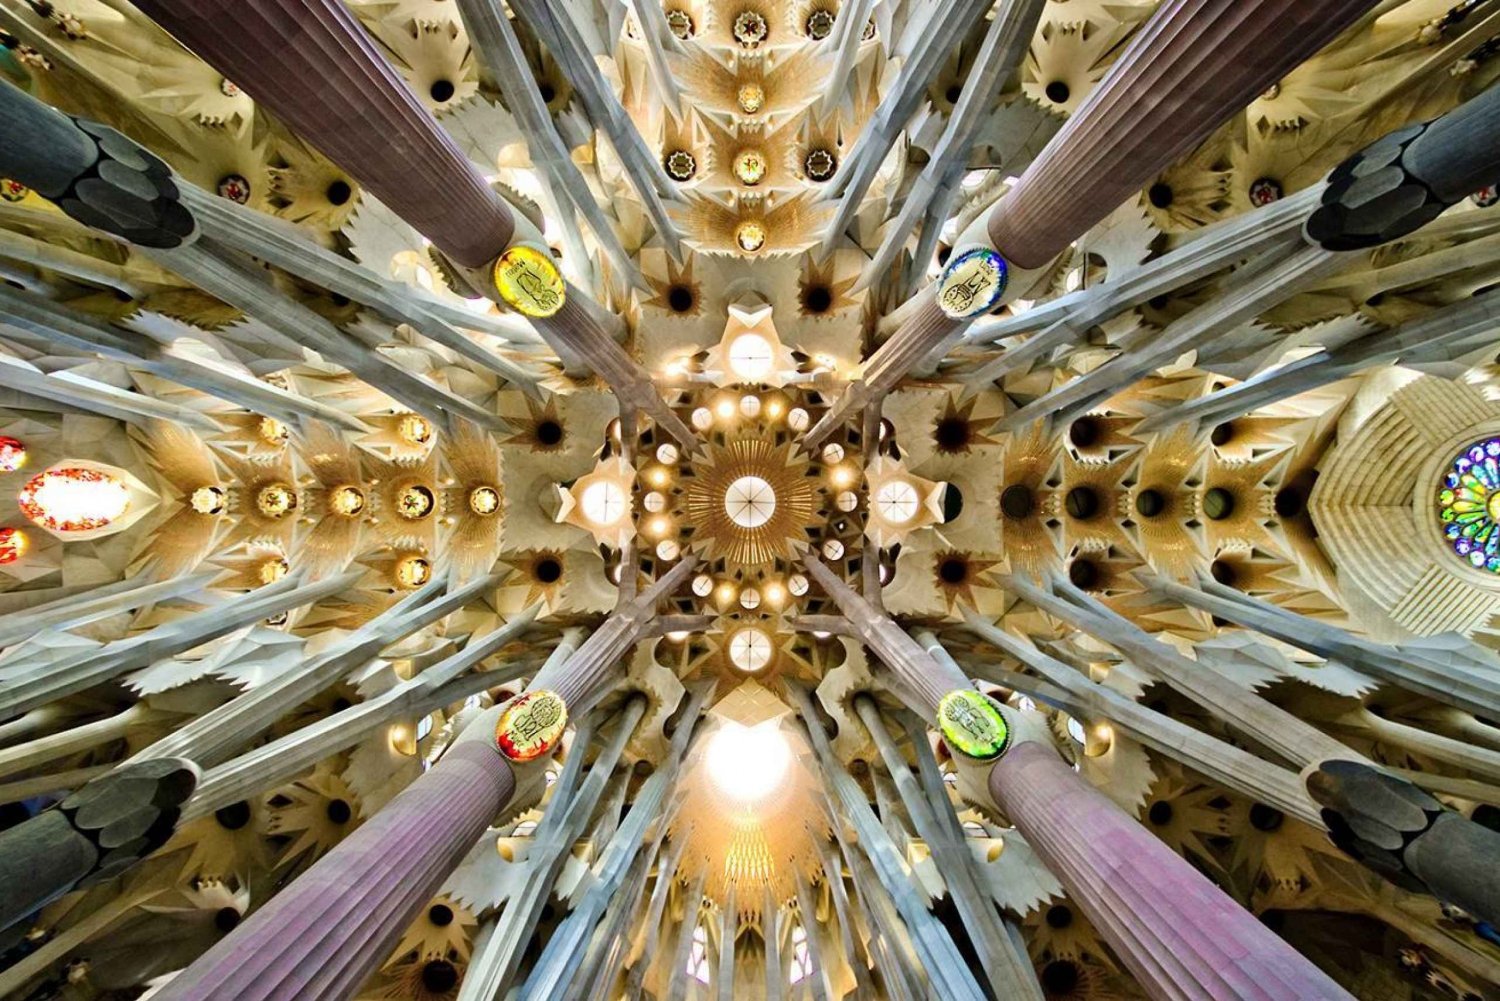 Barcelona: Sagrada Familia and Park Güell with Hotel Pickup